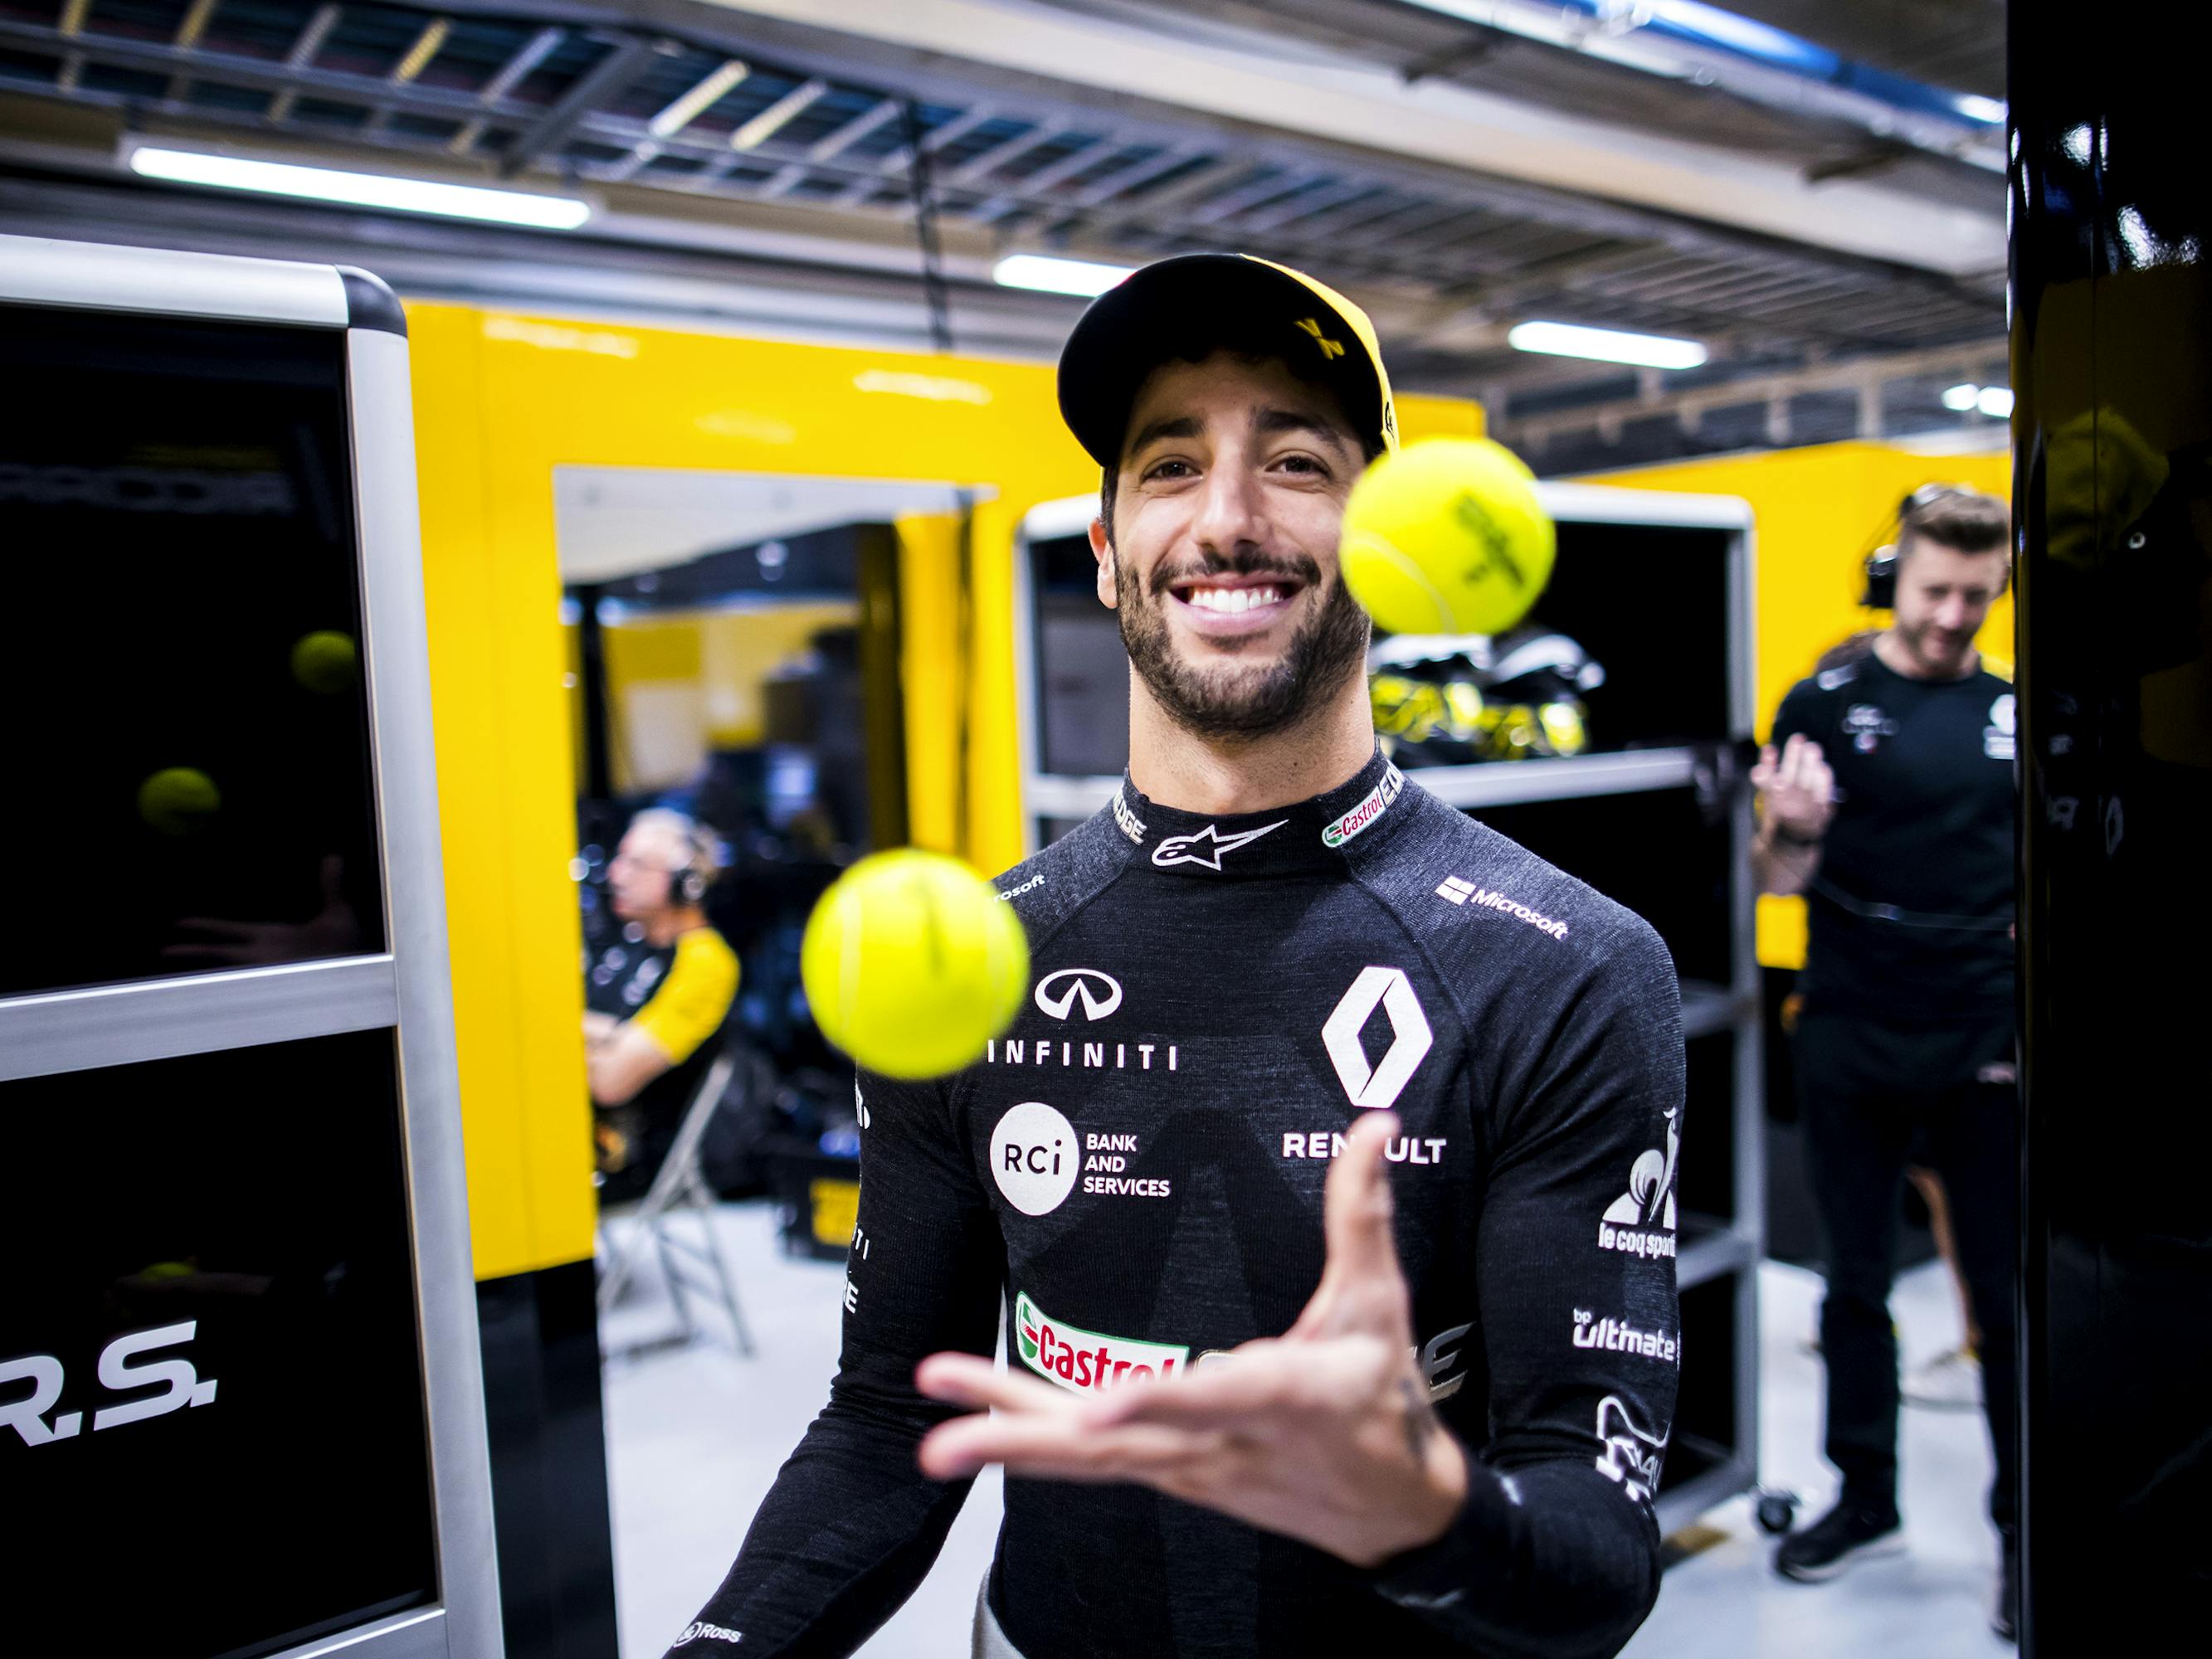 Daniel Ricciardo wears a black sponsored shirt with some white logos. He juggles some tennis balls and smiles.